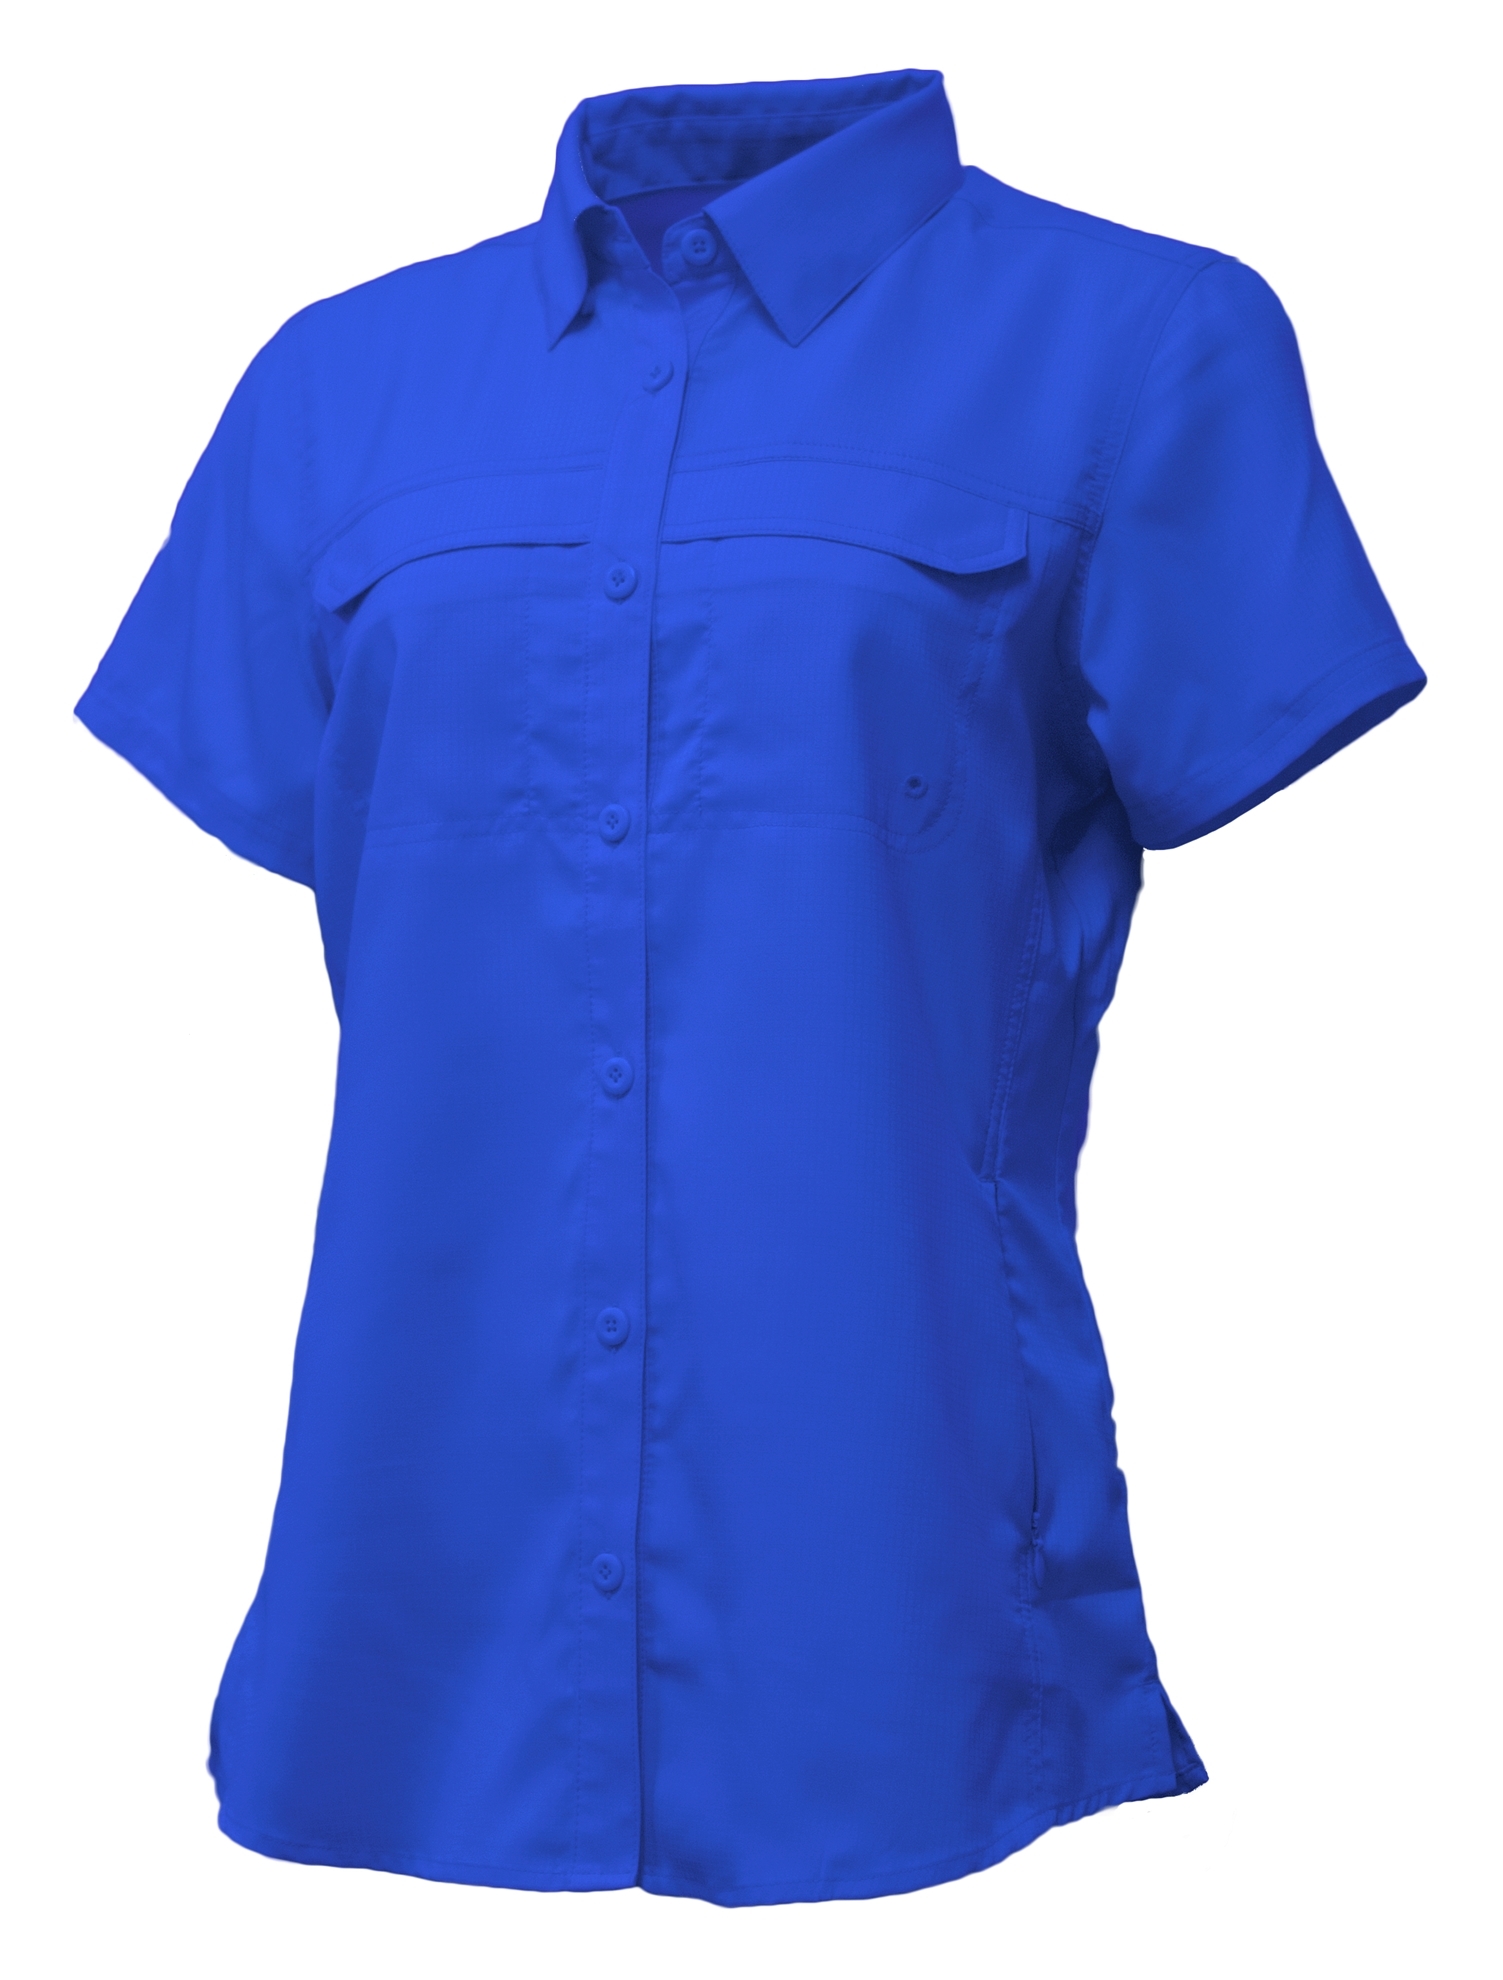 https://www.nyfifth.com/category/20220718/baw-athletic-wear-3101-ladies-short-sleeve-fishing-shirt_ROYAL.jpeg